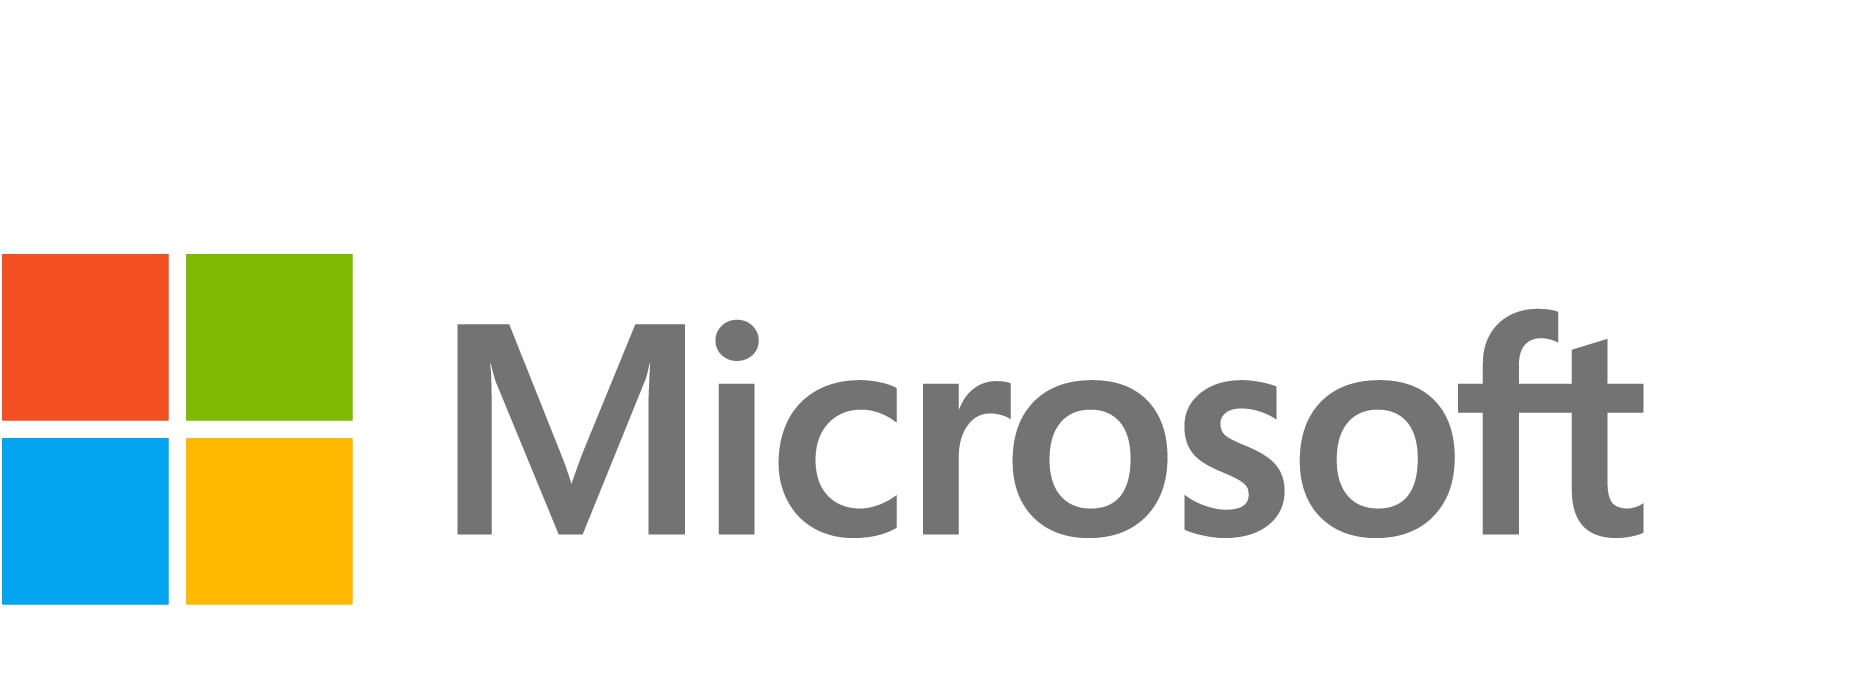 Microsoft Dynamics 365 Finance - subscription license (1 year) - 1 license